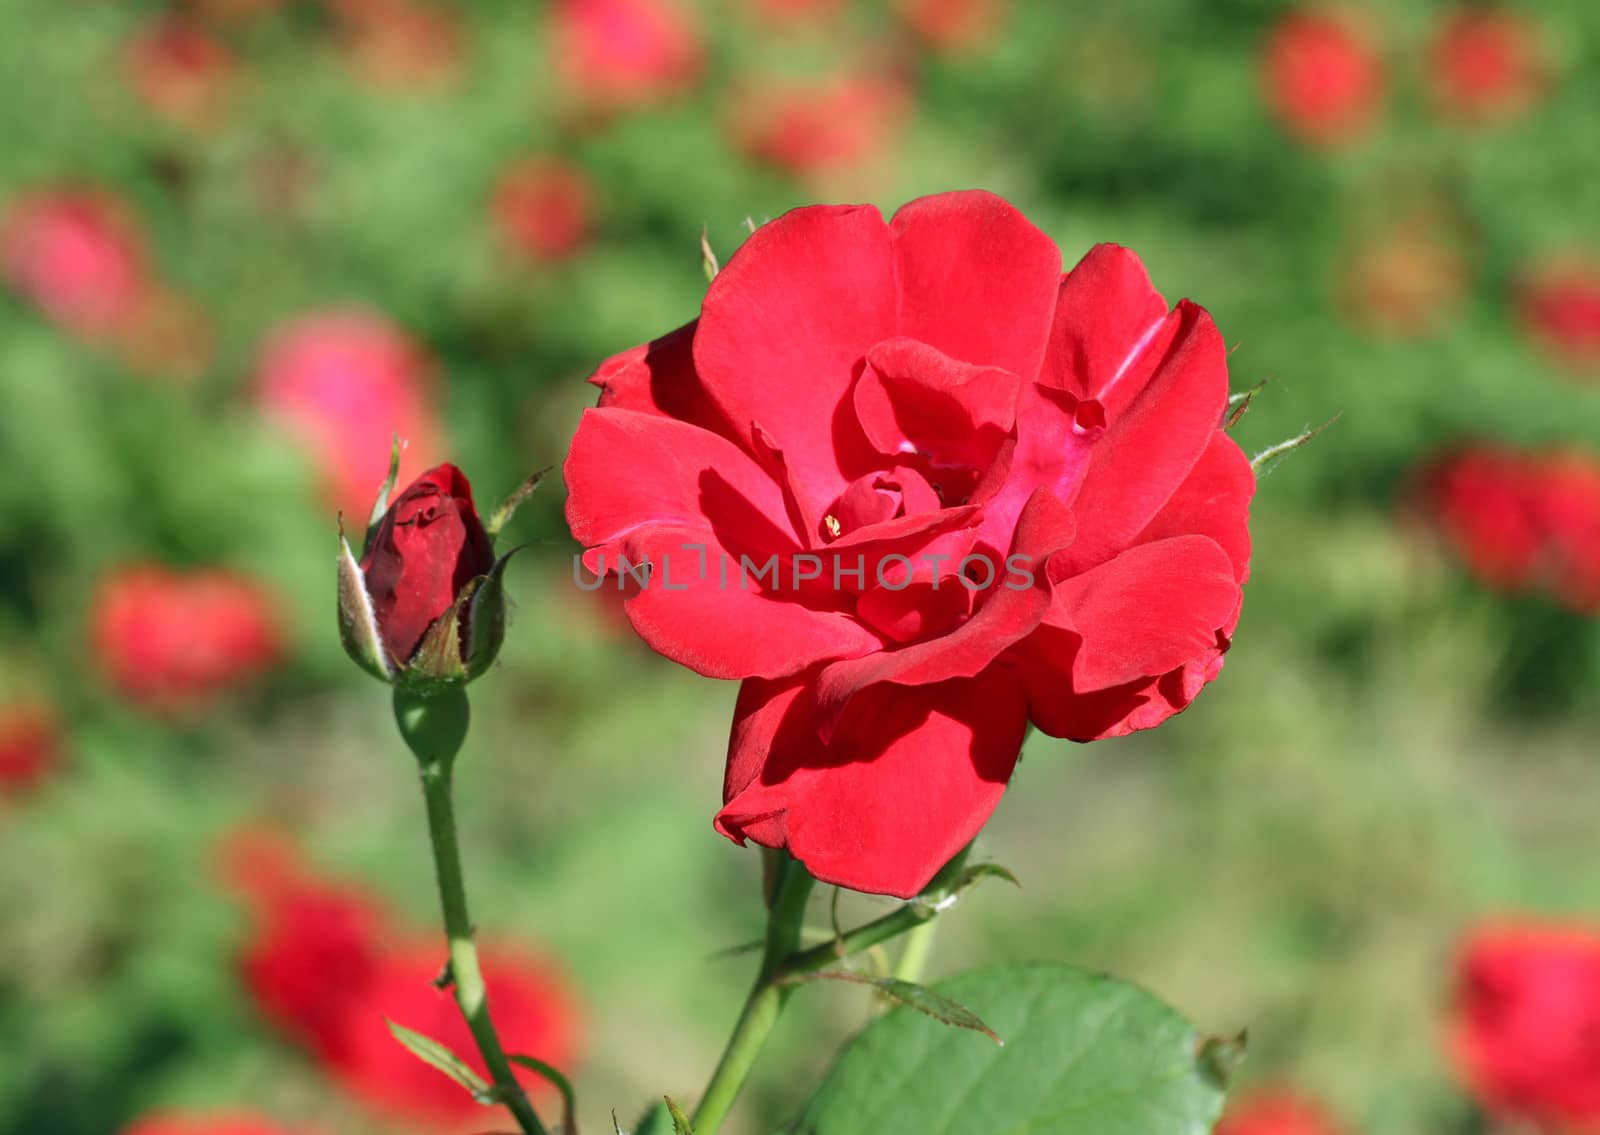 rose in a garden by romantiche